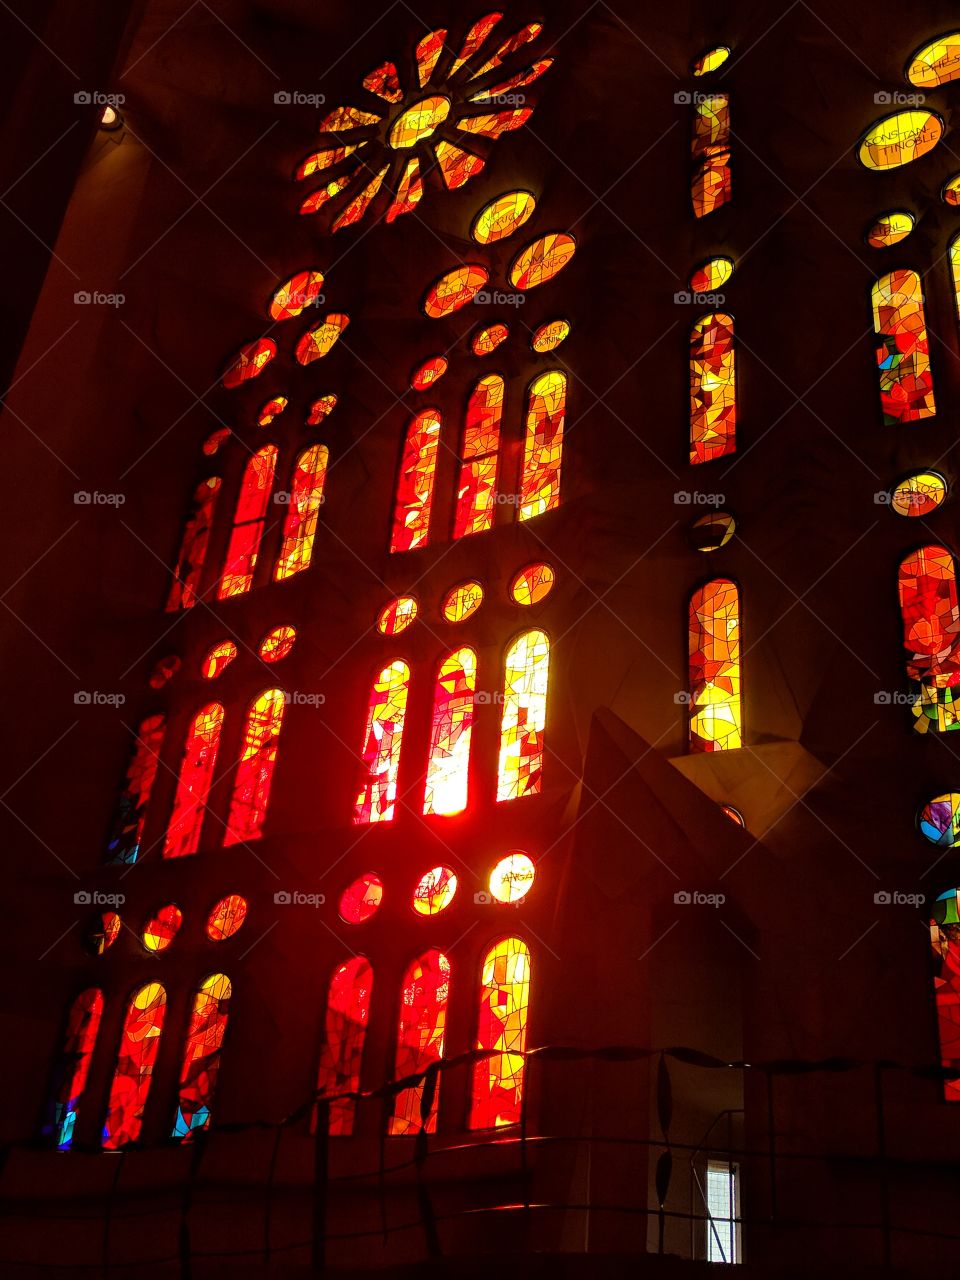 La Sagrada Familia Stained Glass